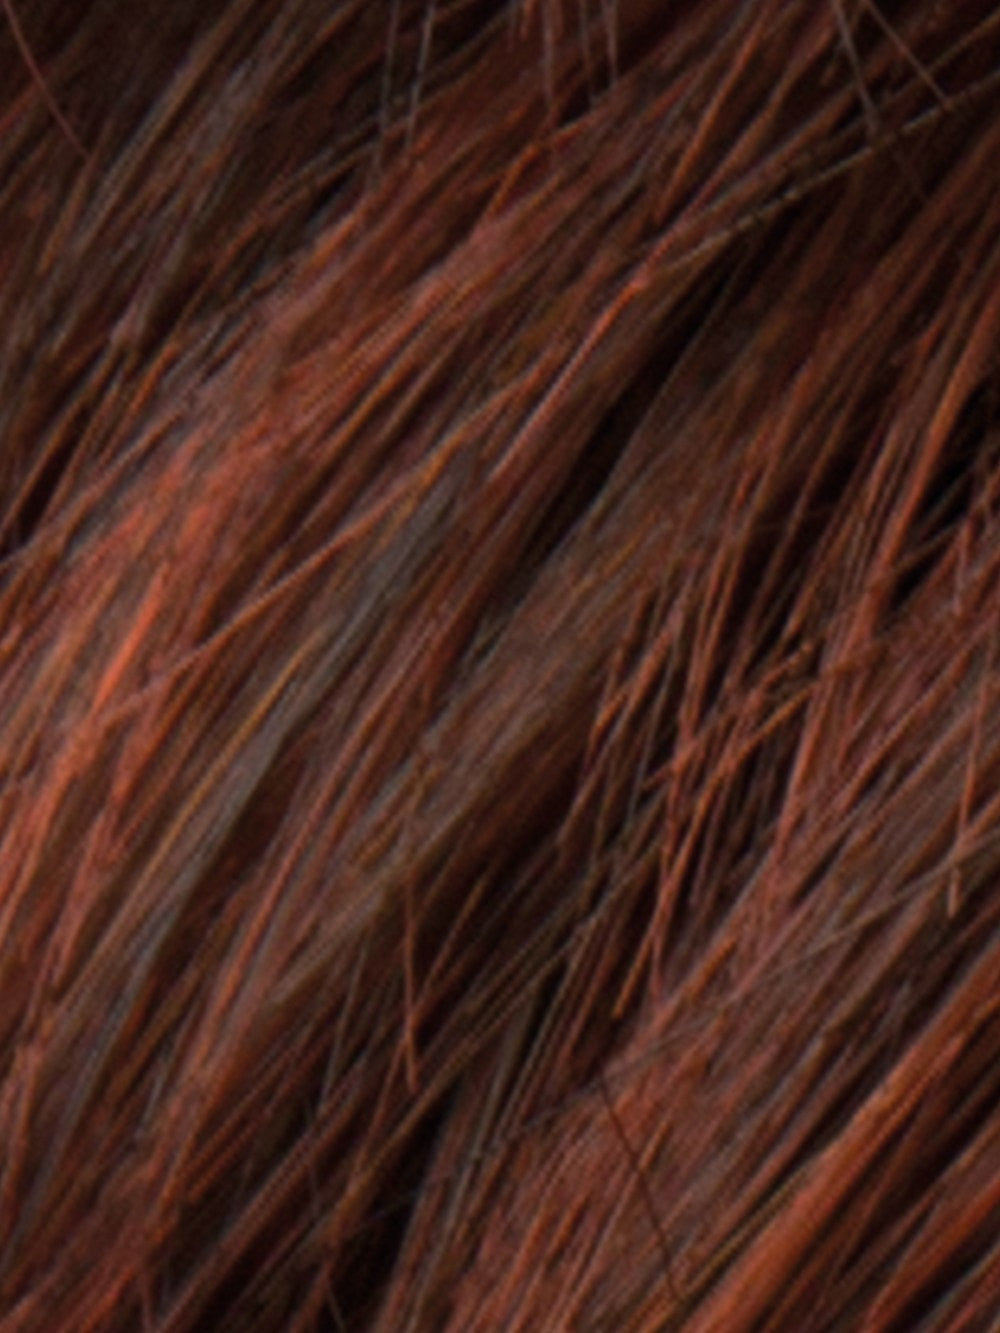 AUBURN MIX | Dark Auburn, Bright Copper Red, and Warm Medium Brown Blend